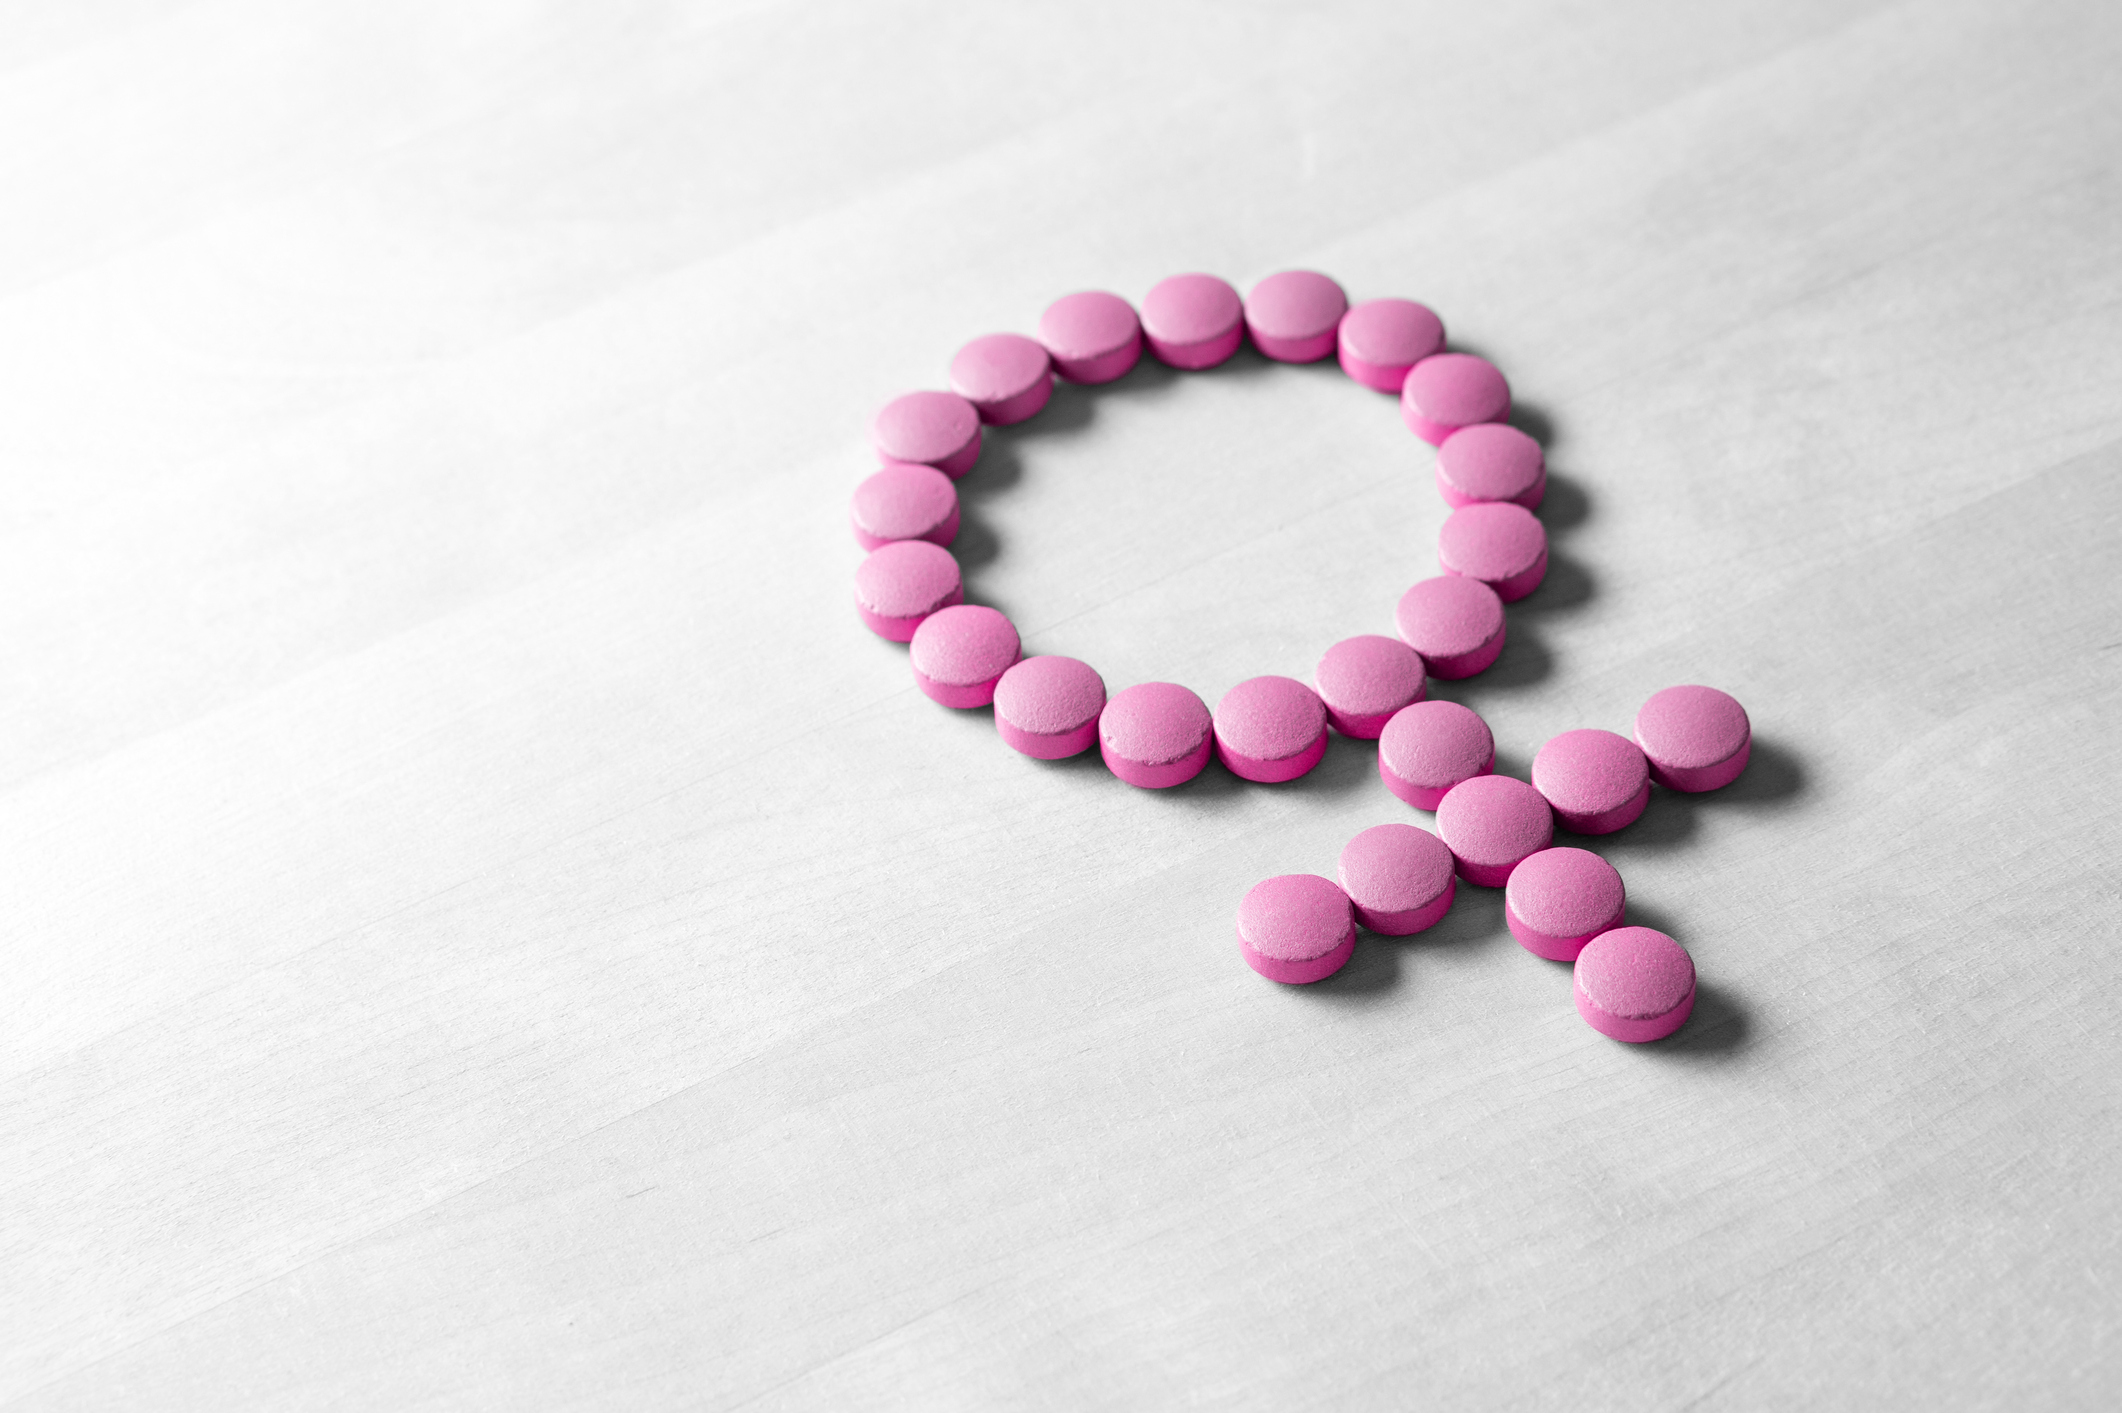 Medicine for woman. Menopause, pms, menstruation or ...